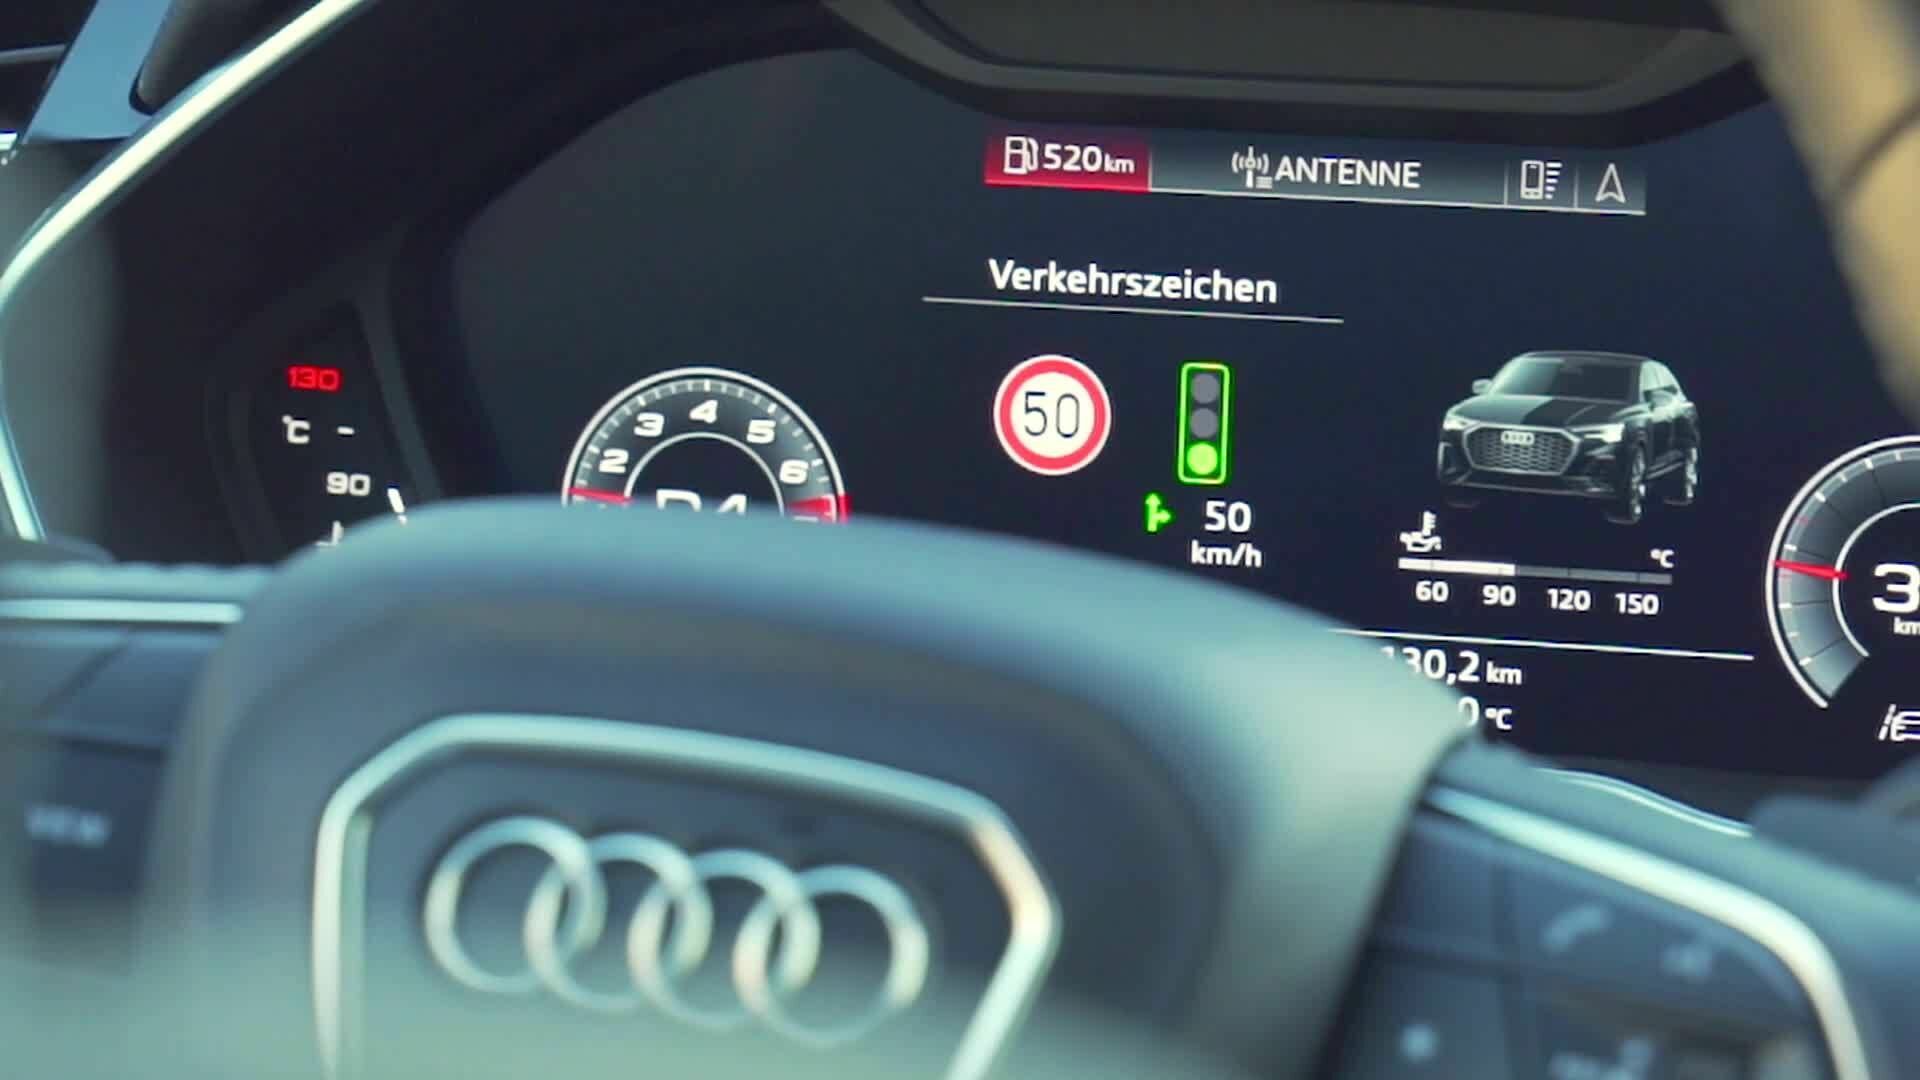 Audi networks with traffic lights in Düsseldorf